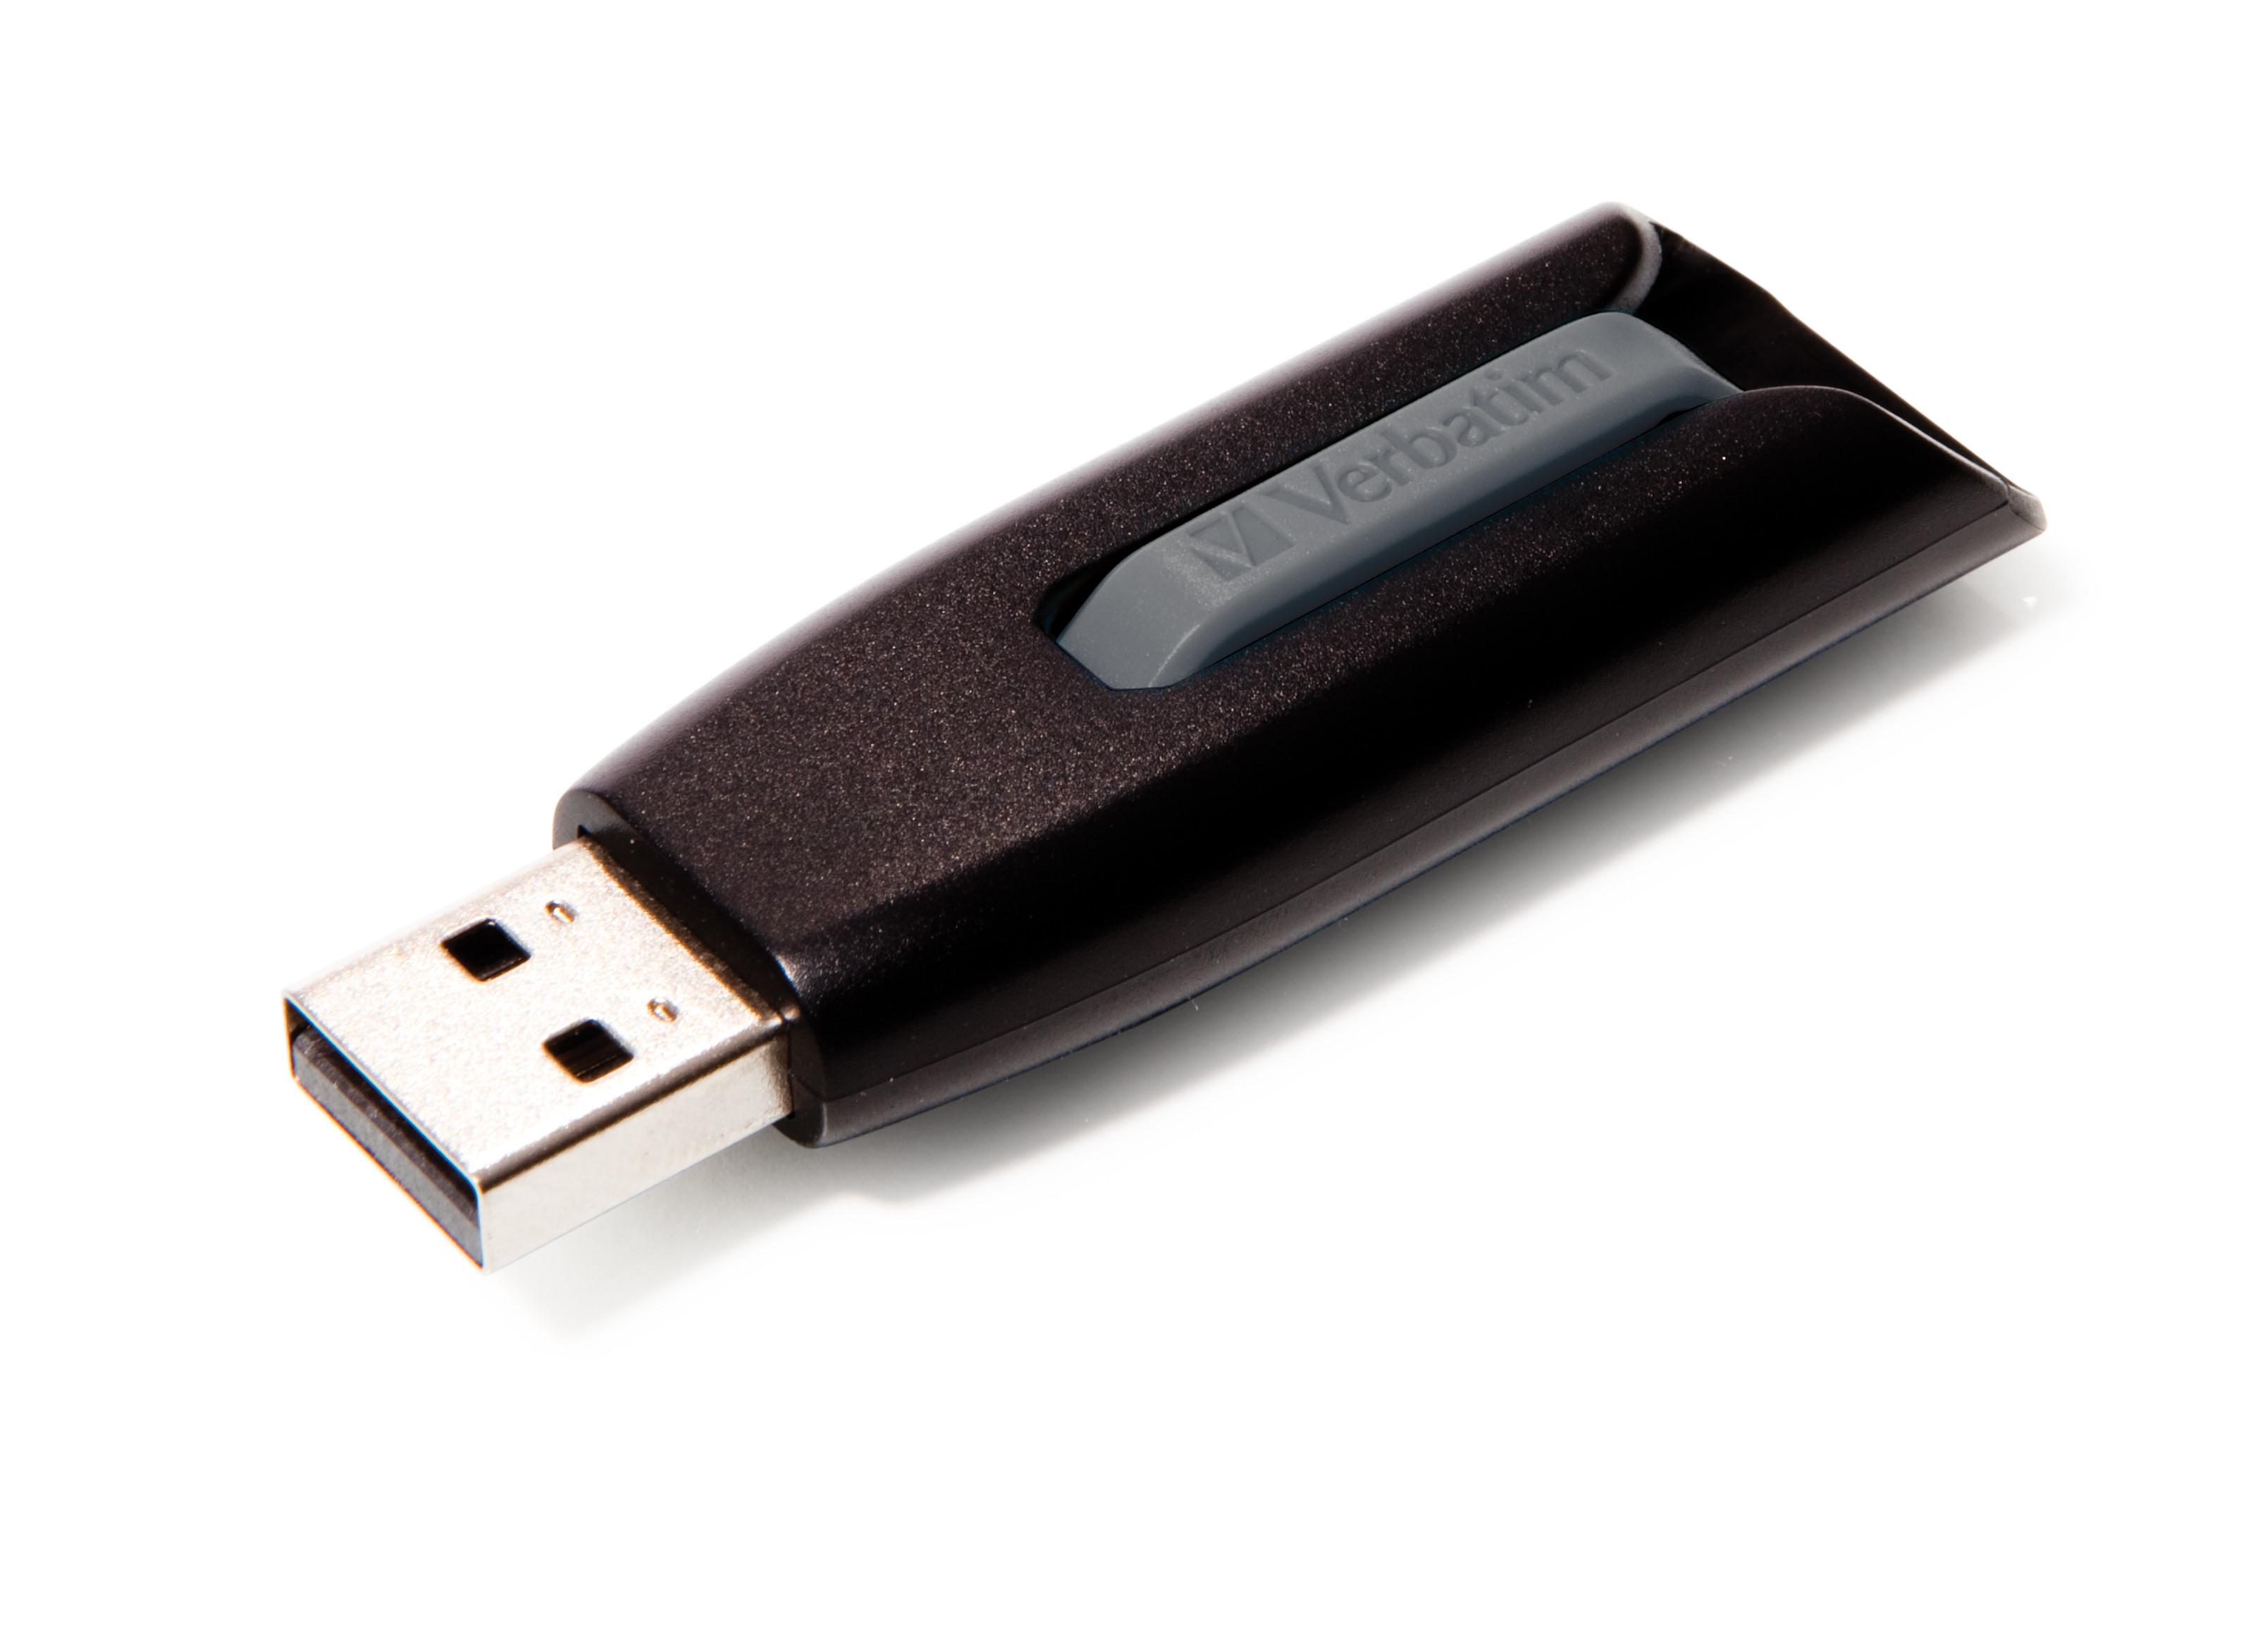 Verbatim  Verbatim V3 - USB 3.0-Stick 32 GB - Schwarz 